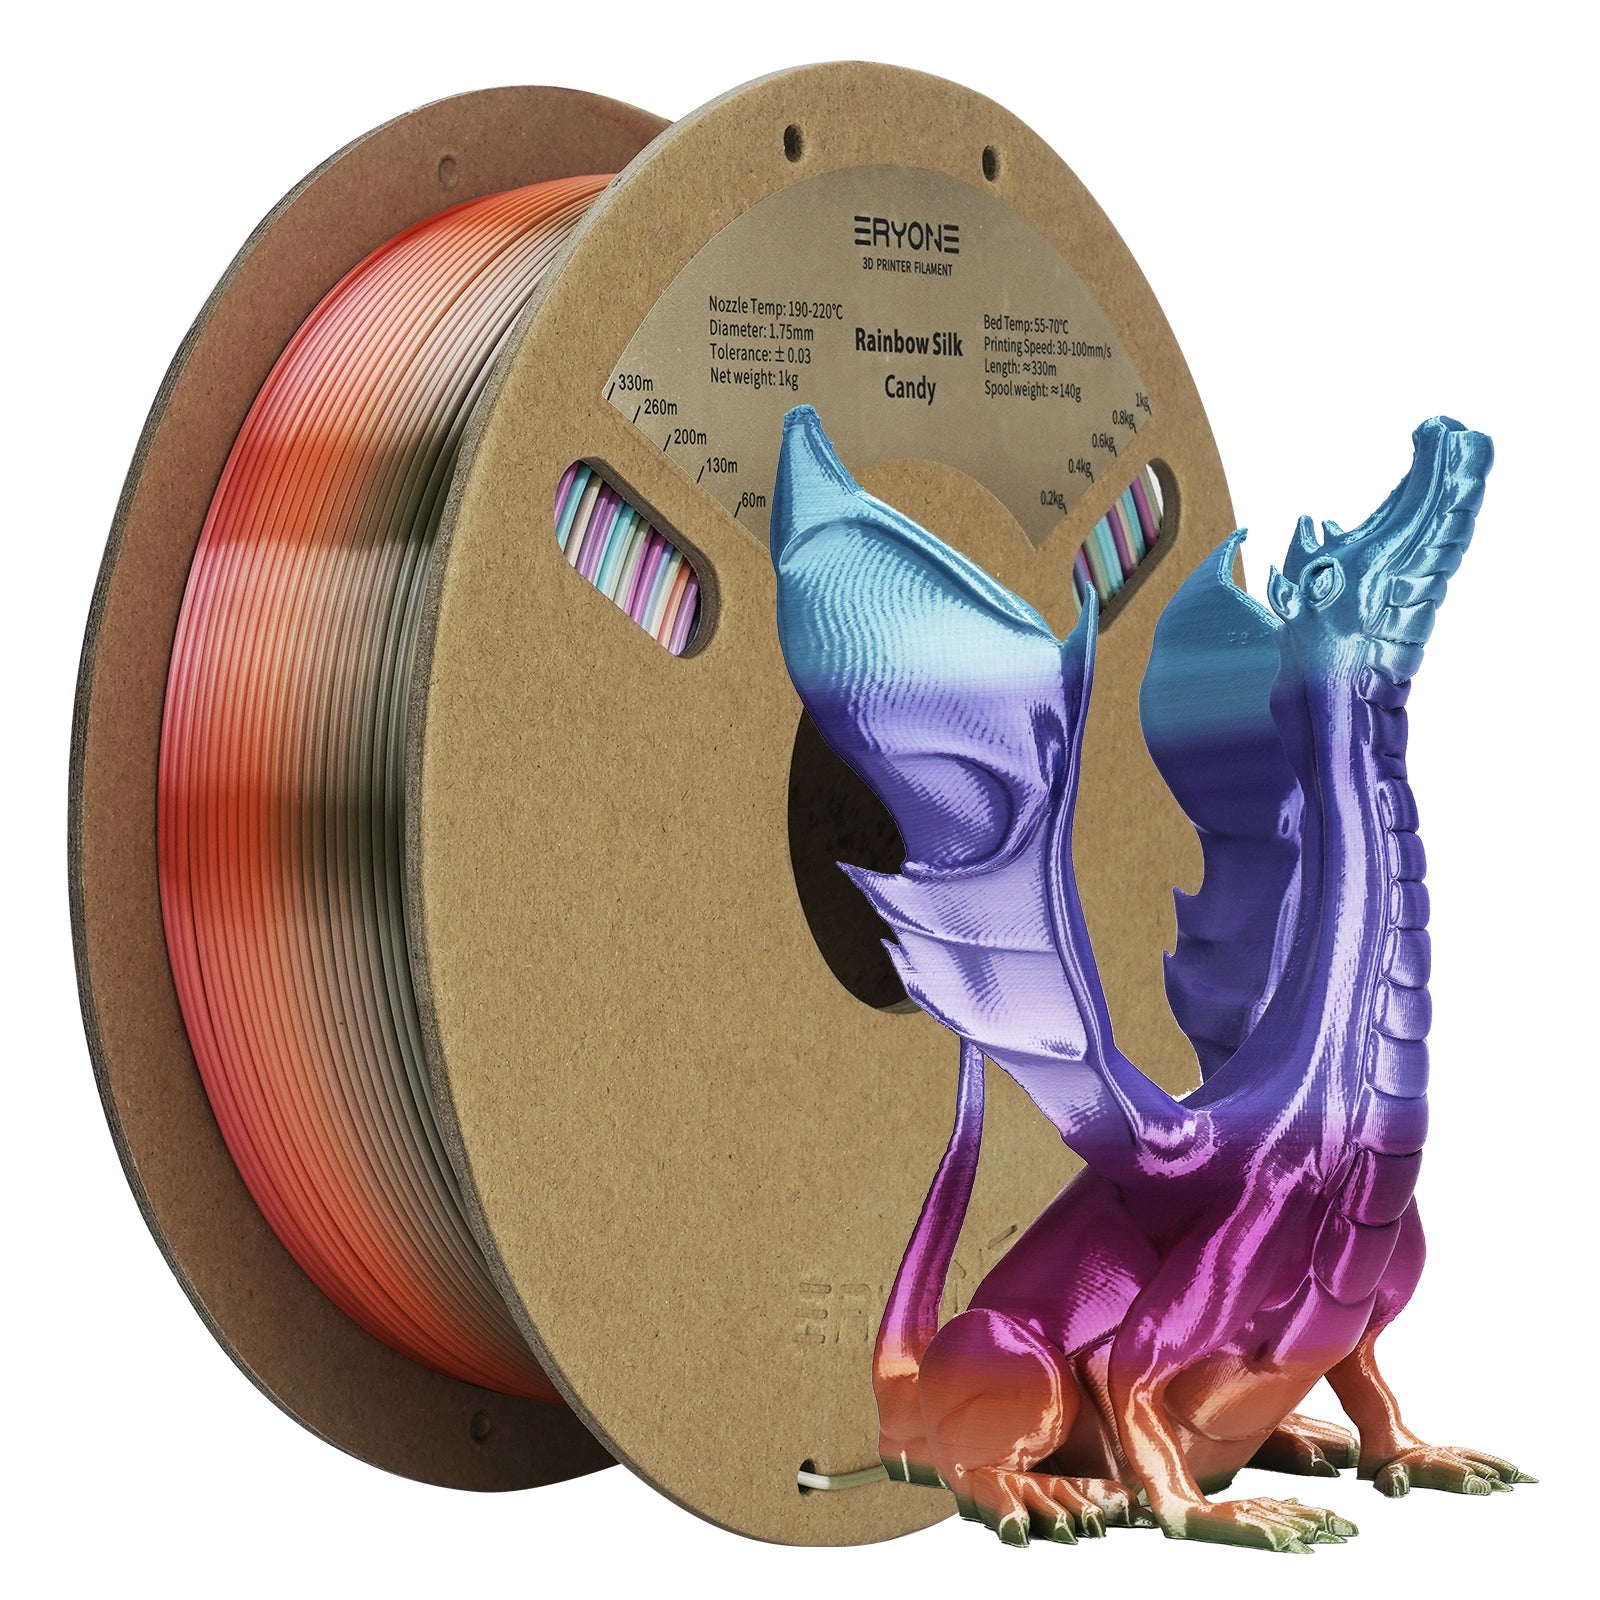 ERYONE Silk Rainbow Filament PLA 1.75 mm for 3D Printer, +/-0.05 mm, 1 kg / Spool